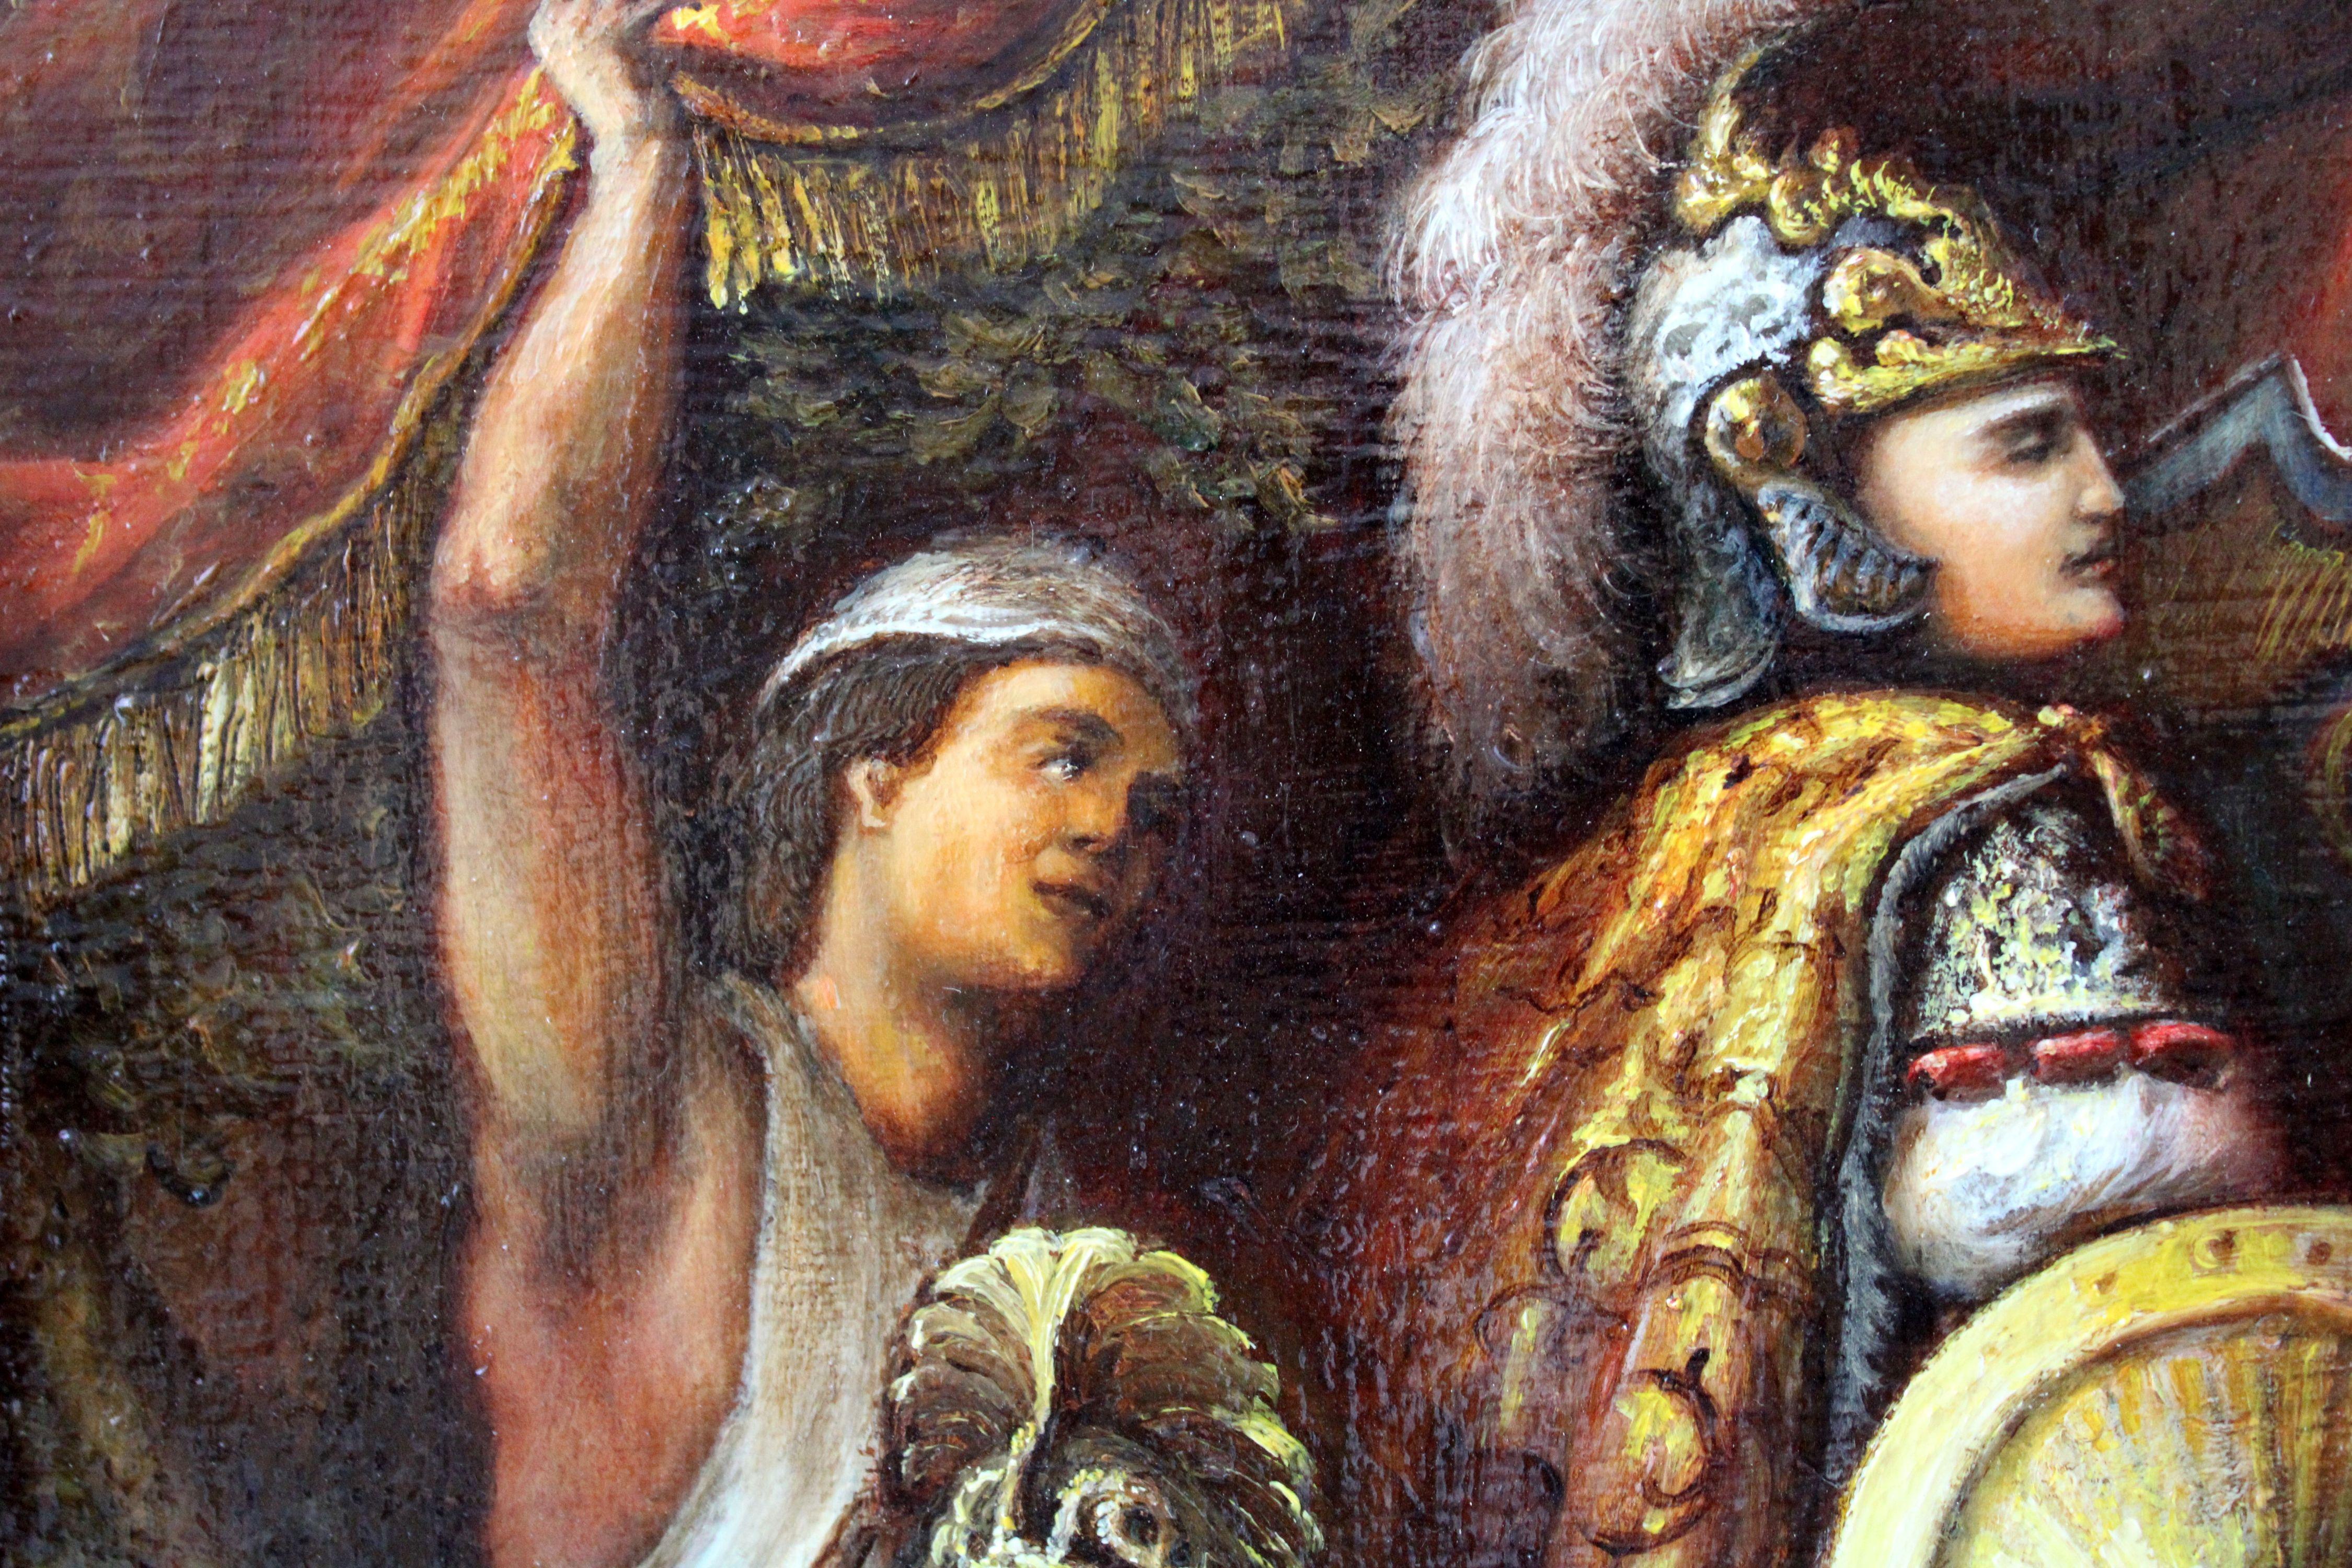 Caesar on his way to Pompeii. 1999, canvas, oil, 40x50 cm

